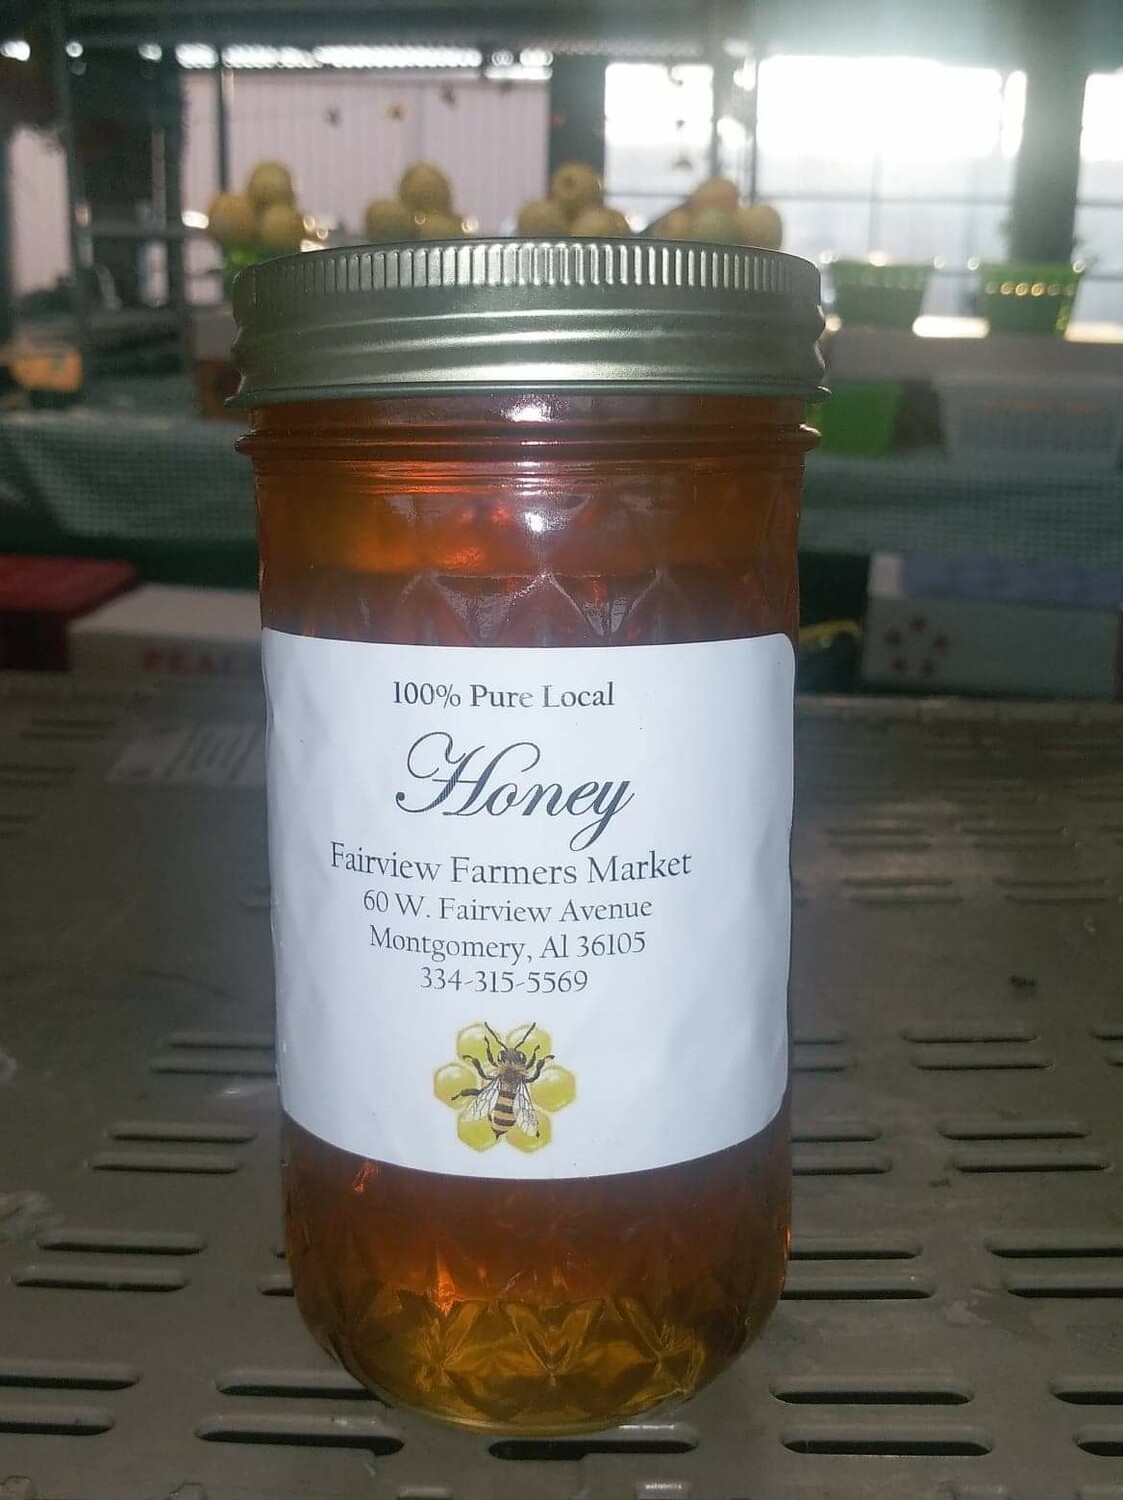 Farmers Market: 100% Pure Local Honey